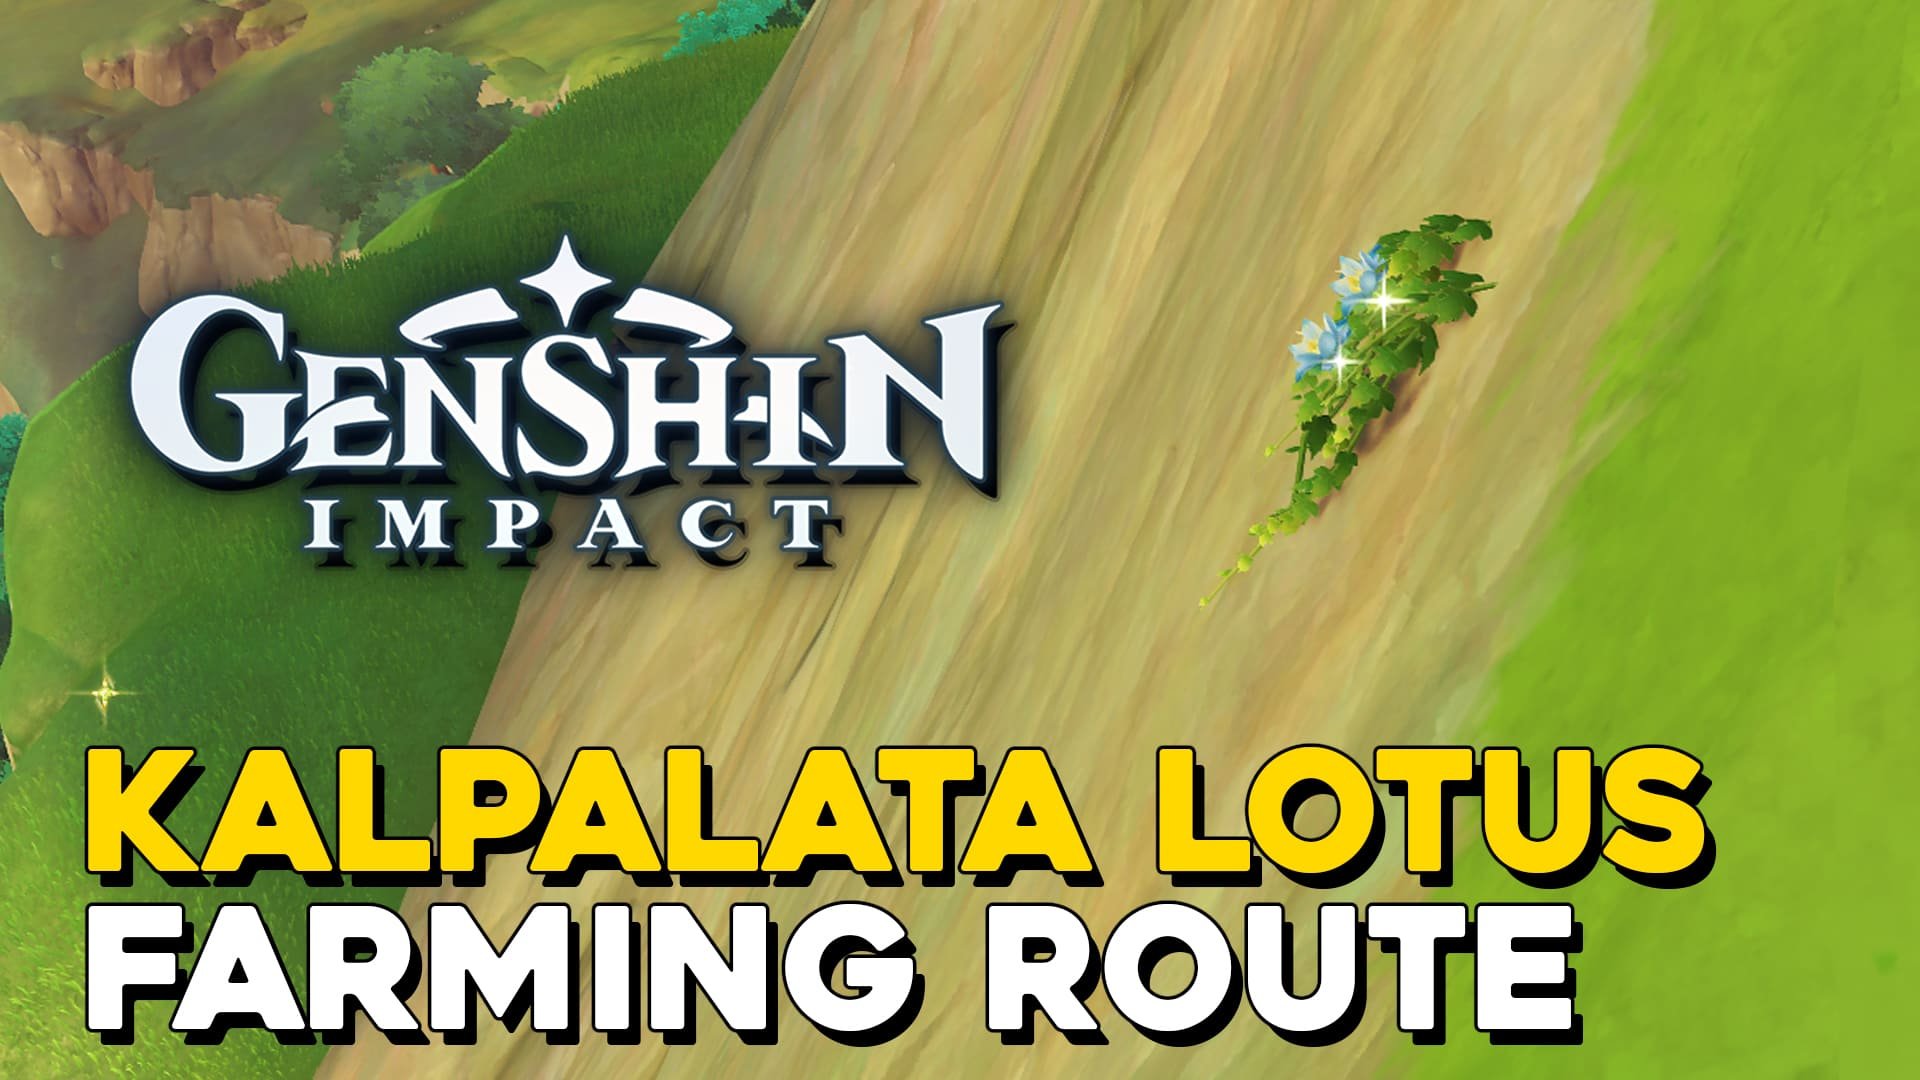 Genshin Impact Kalpalata Lotus Farming Route (Kalpalata Lotus Locations)